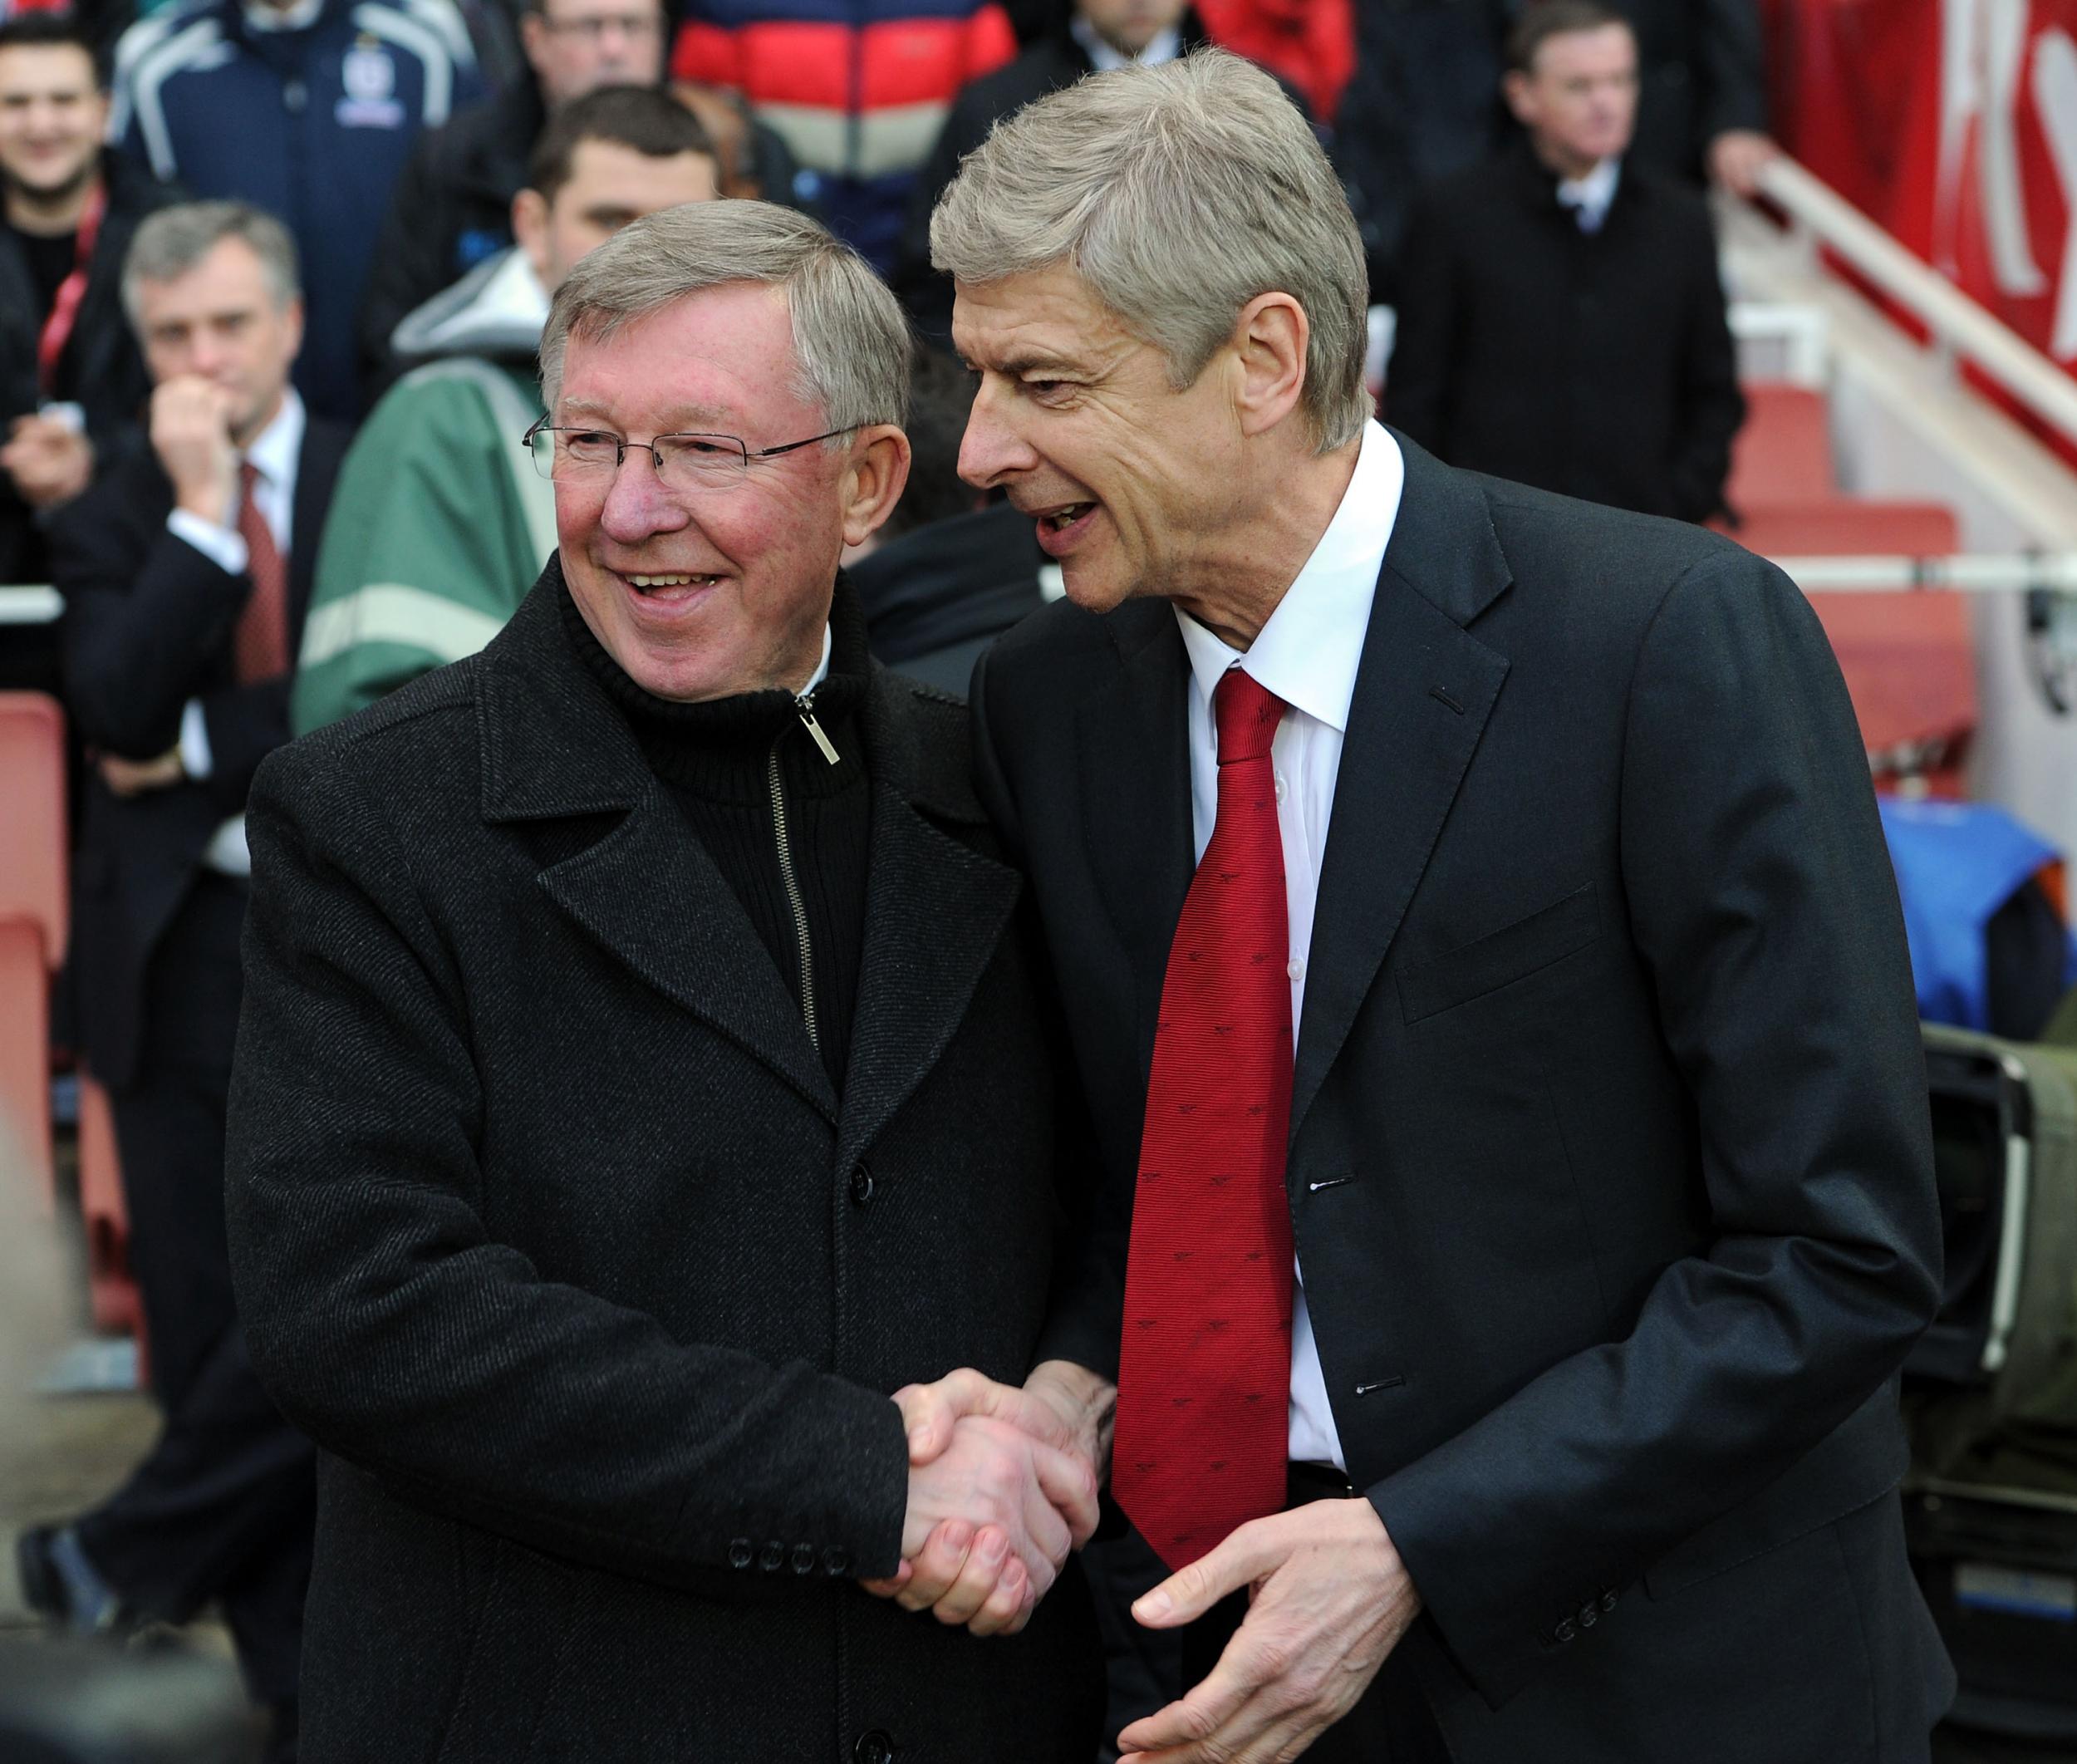 Arsene Wenger and Sir Alex Ferguson spent their best years as fierce Premier League rivals